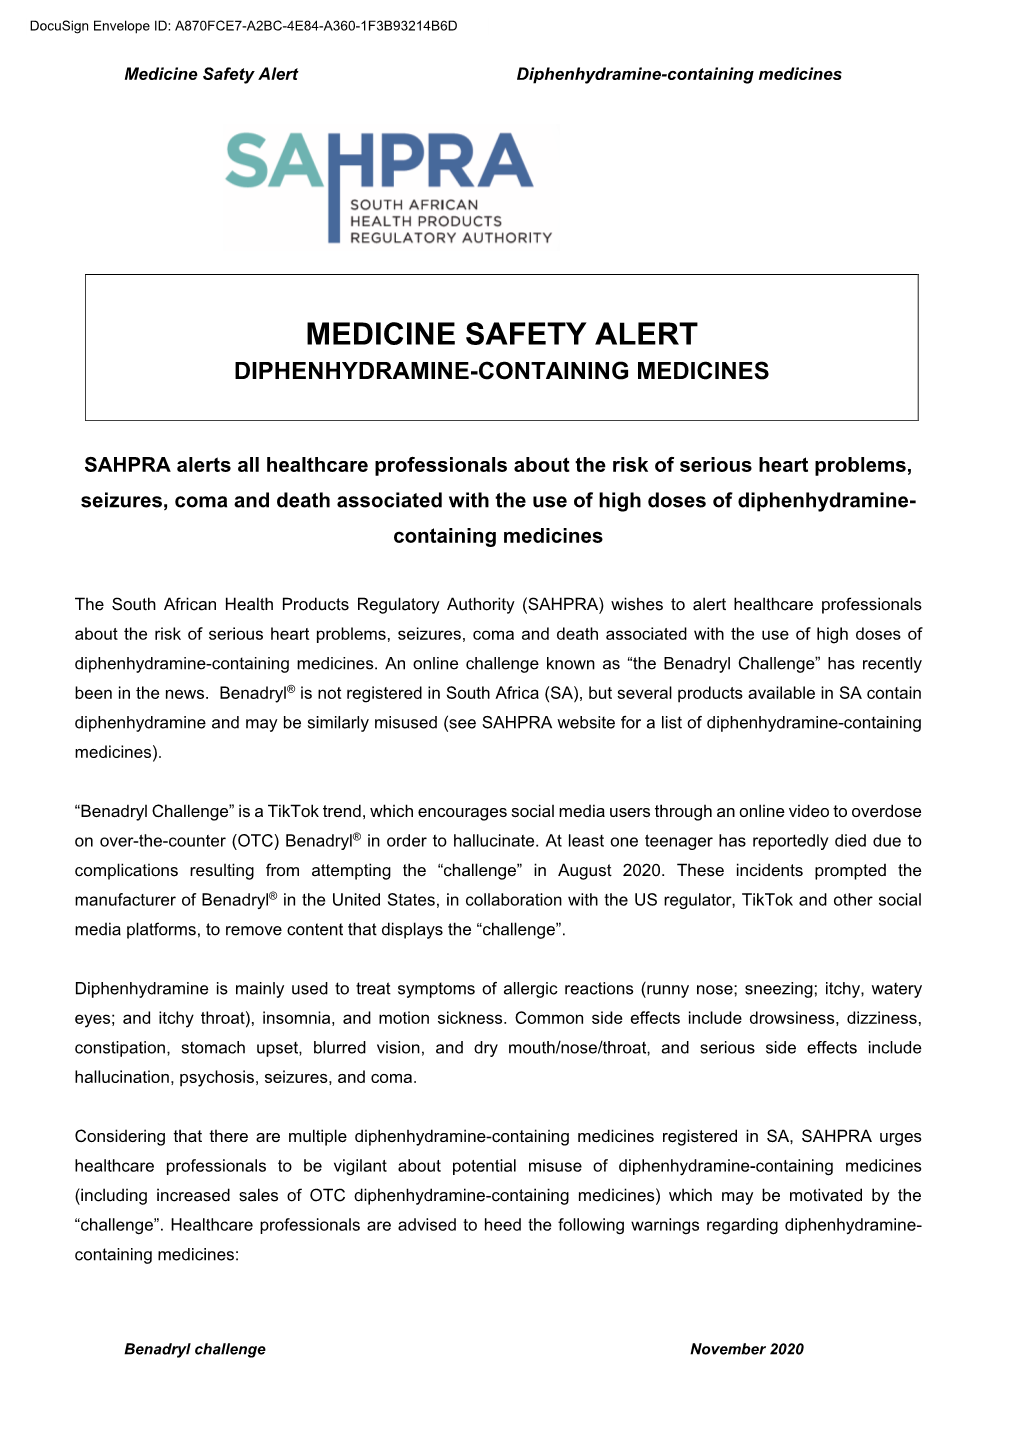 Diphenhydramine-Containing Medicines